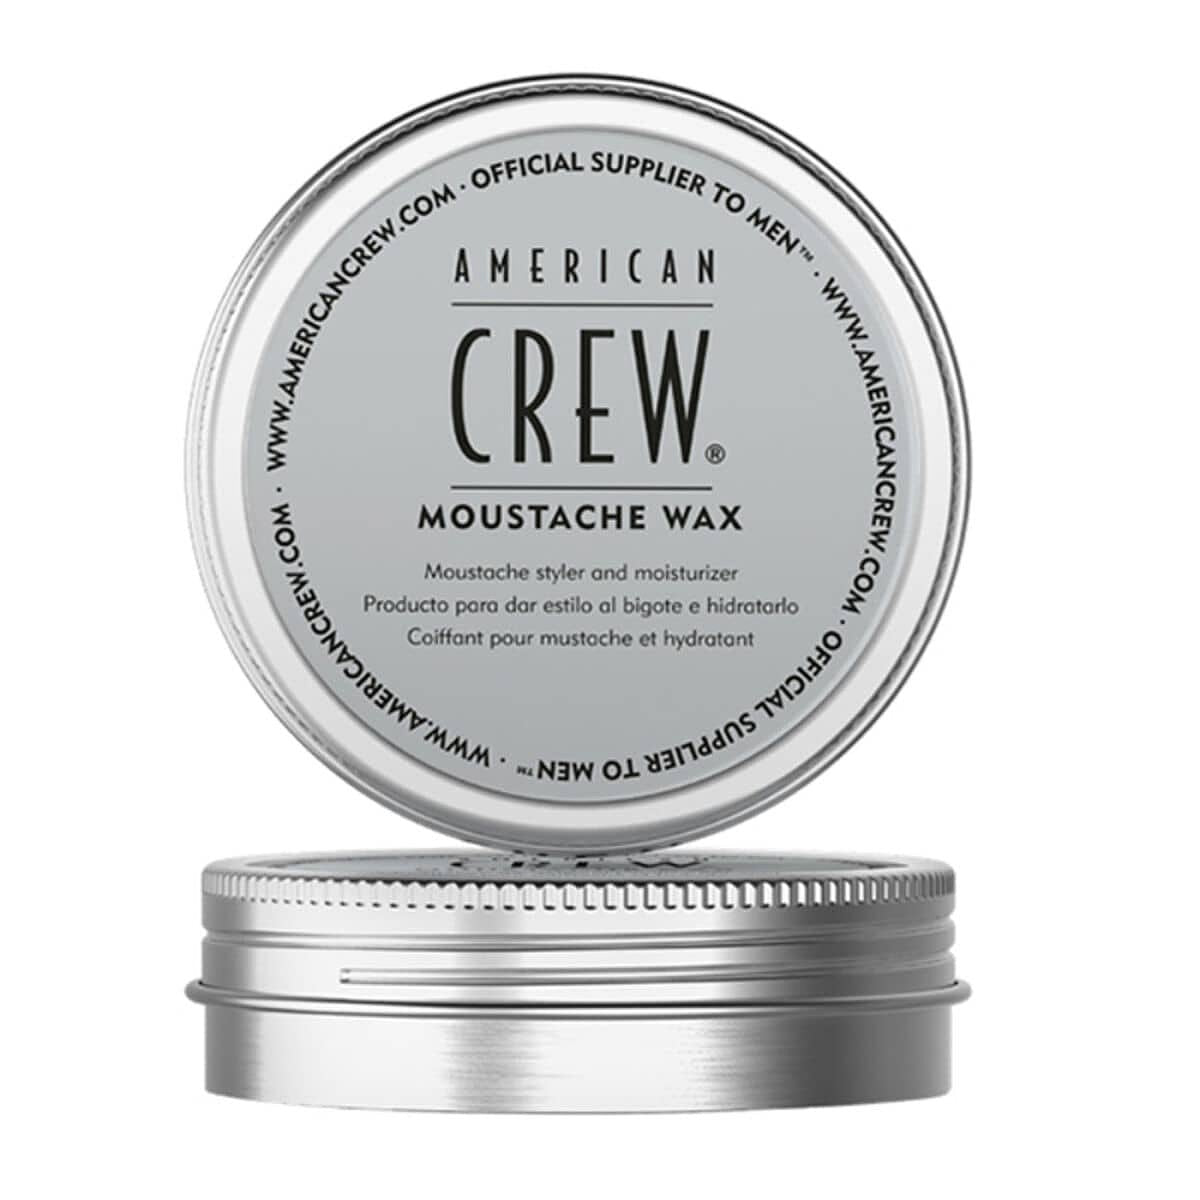 American Crew moustache wax 15ml